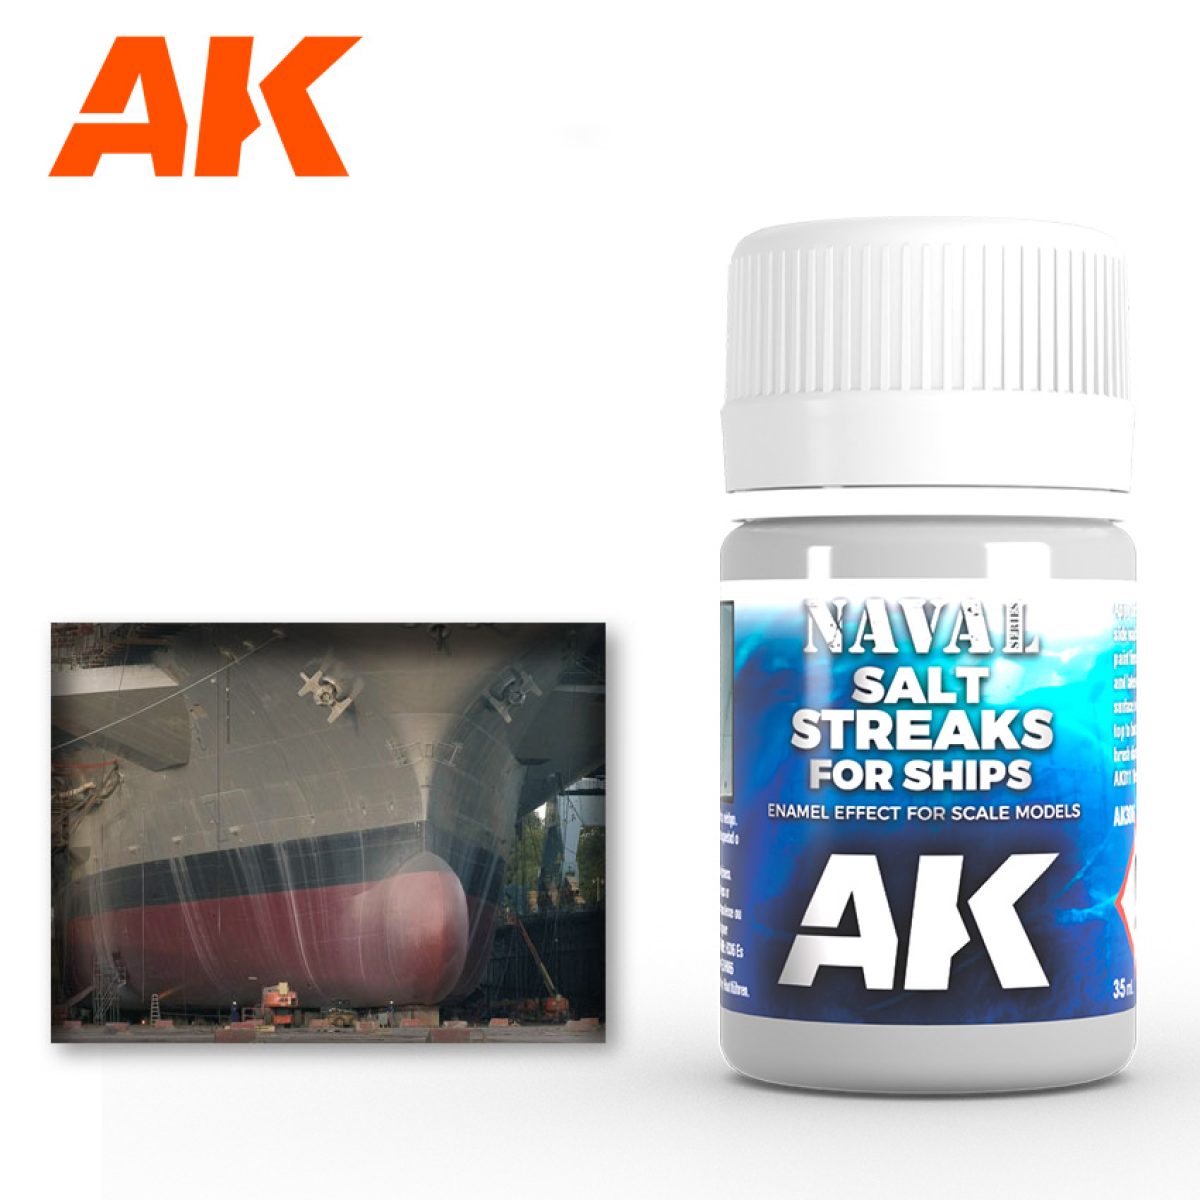 Buy Streaking Grime for DAK Vehicles online for 3,75€